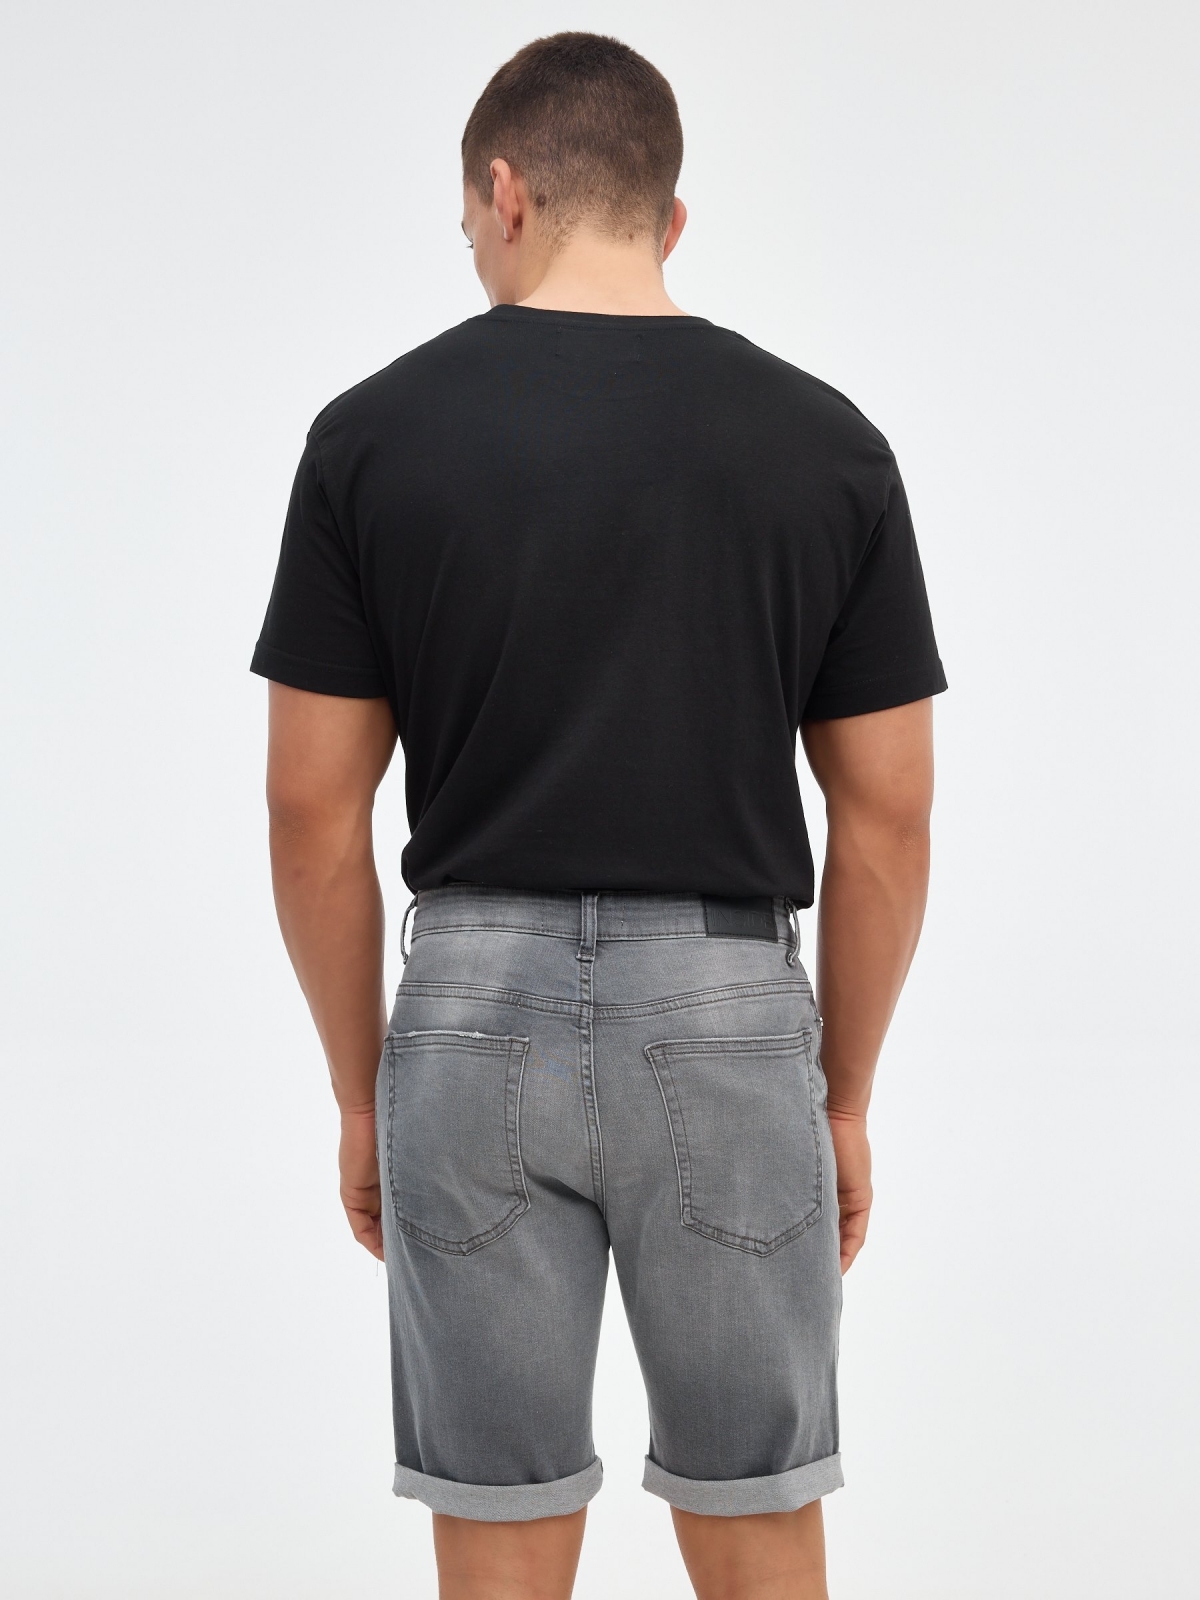 Grey skinny denim bermuda shorts grey middle back view